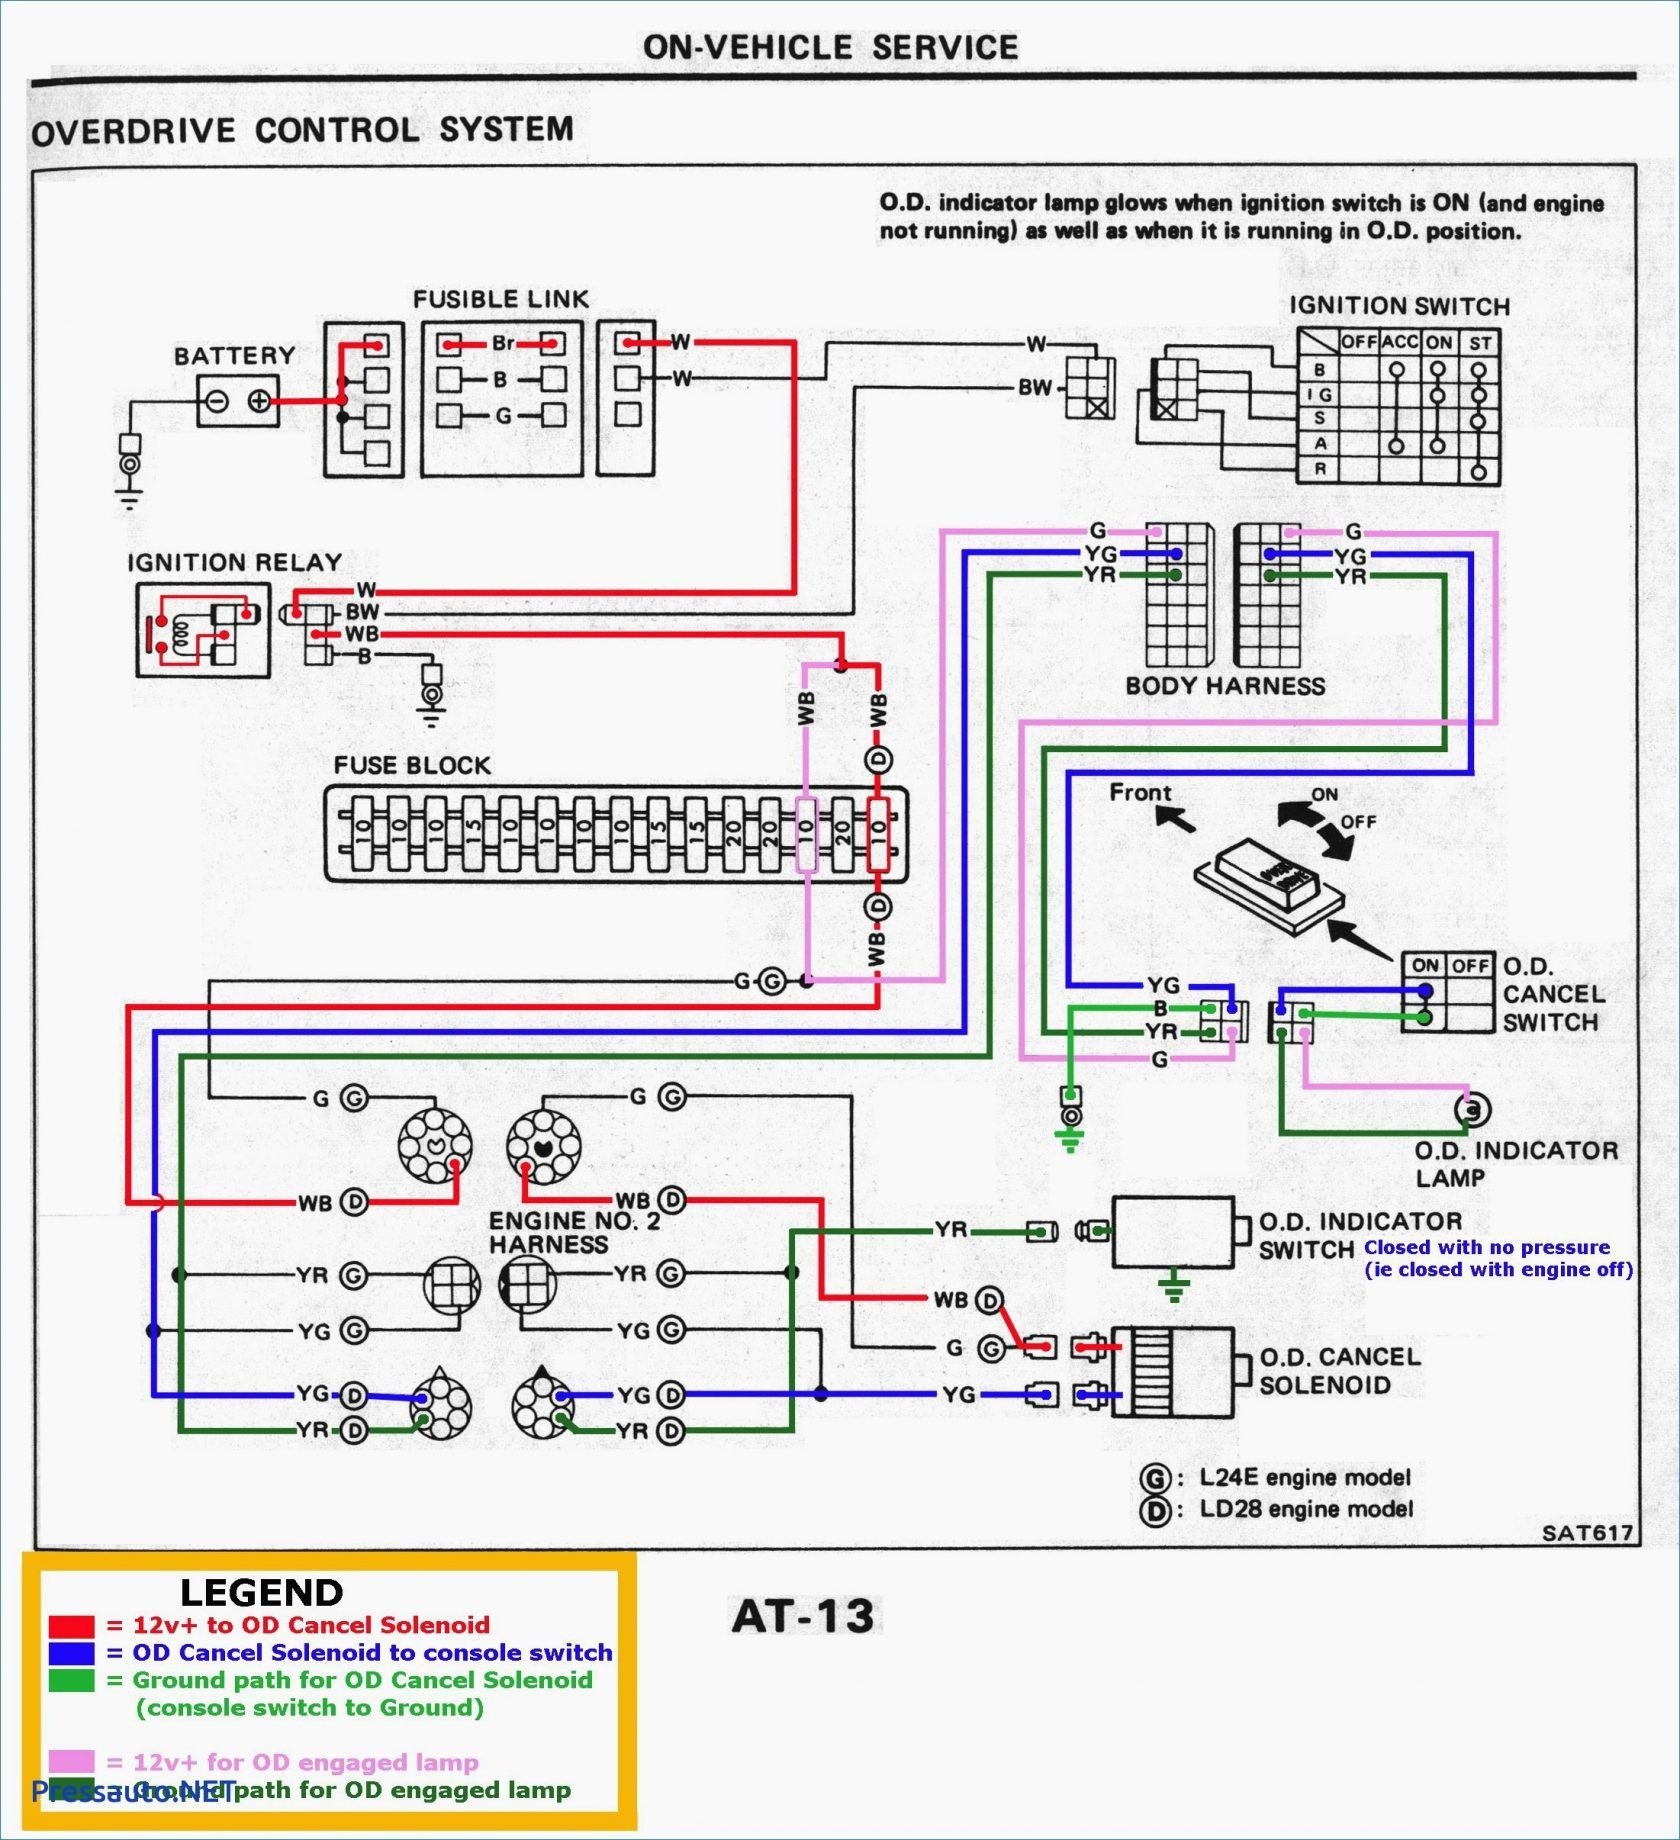 Wiring Diagram Starter solenoid New Ignition Relay Wiring Diagram Fresh Starter solenoid Wiring Diagram